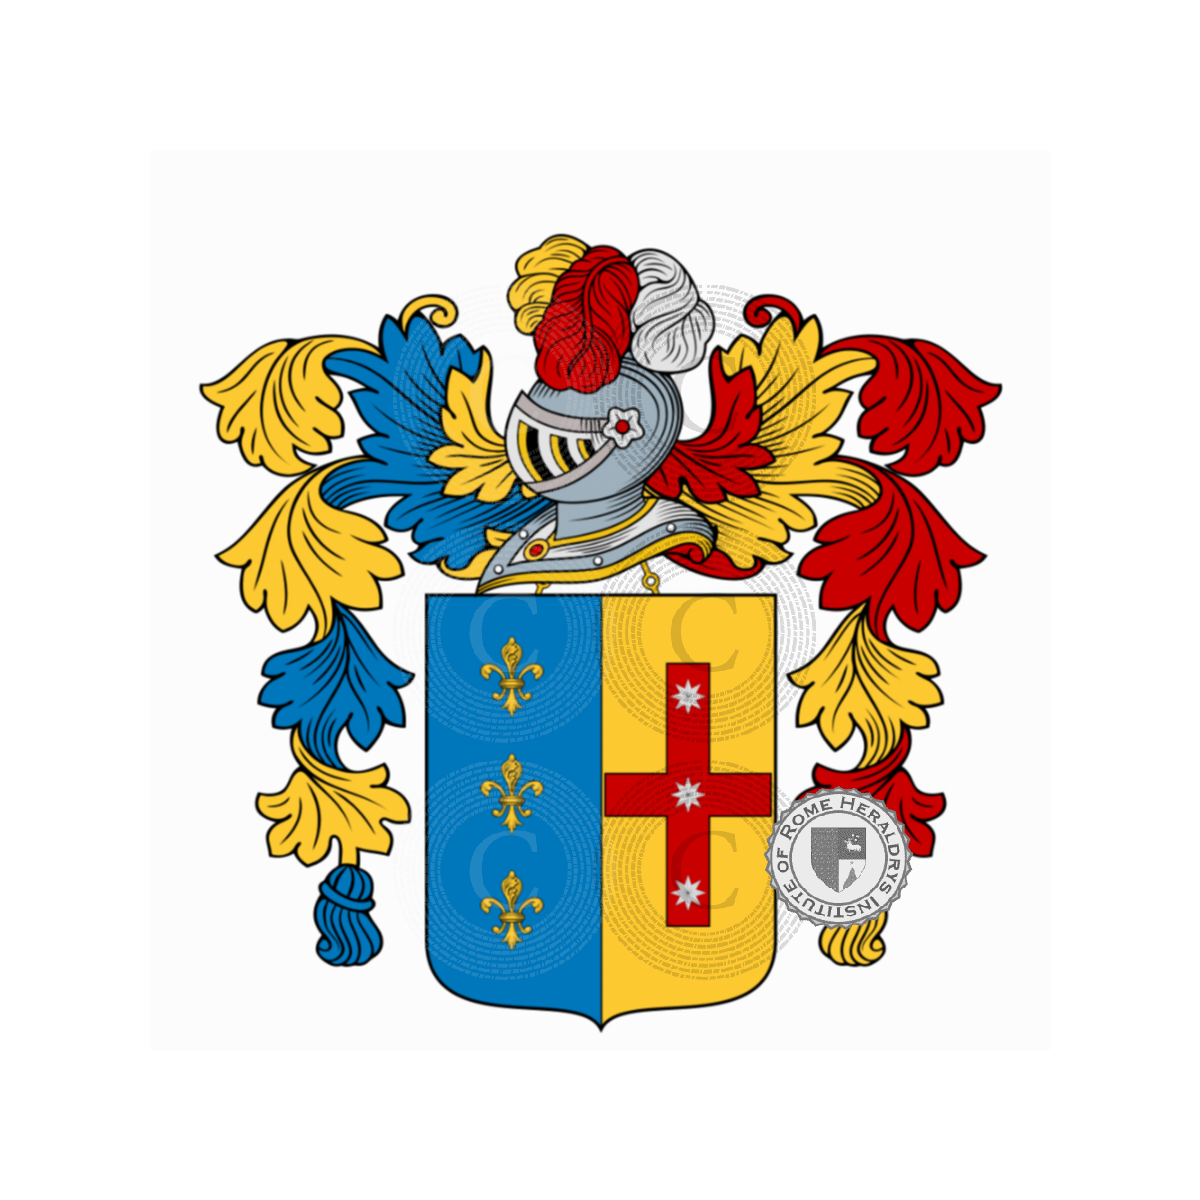 Coat of arms of familyEmiliani